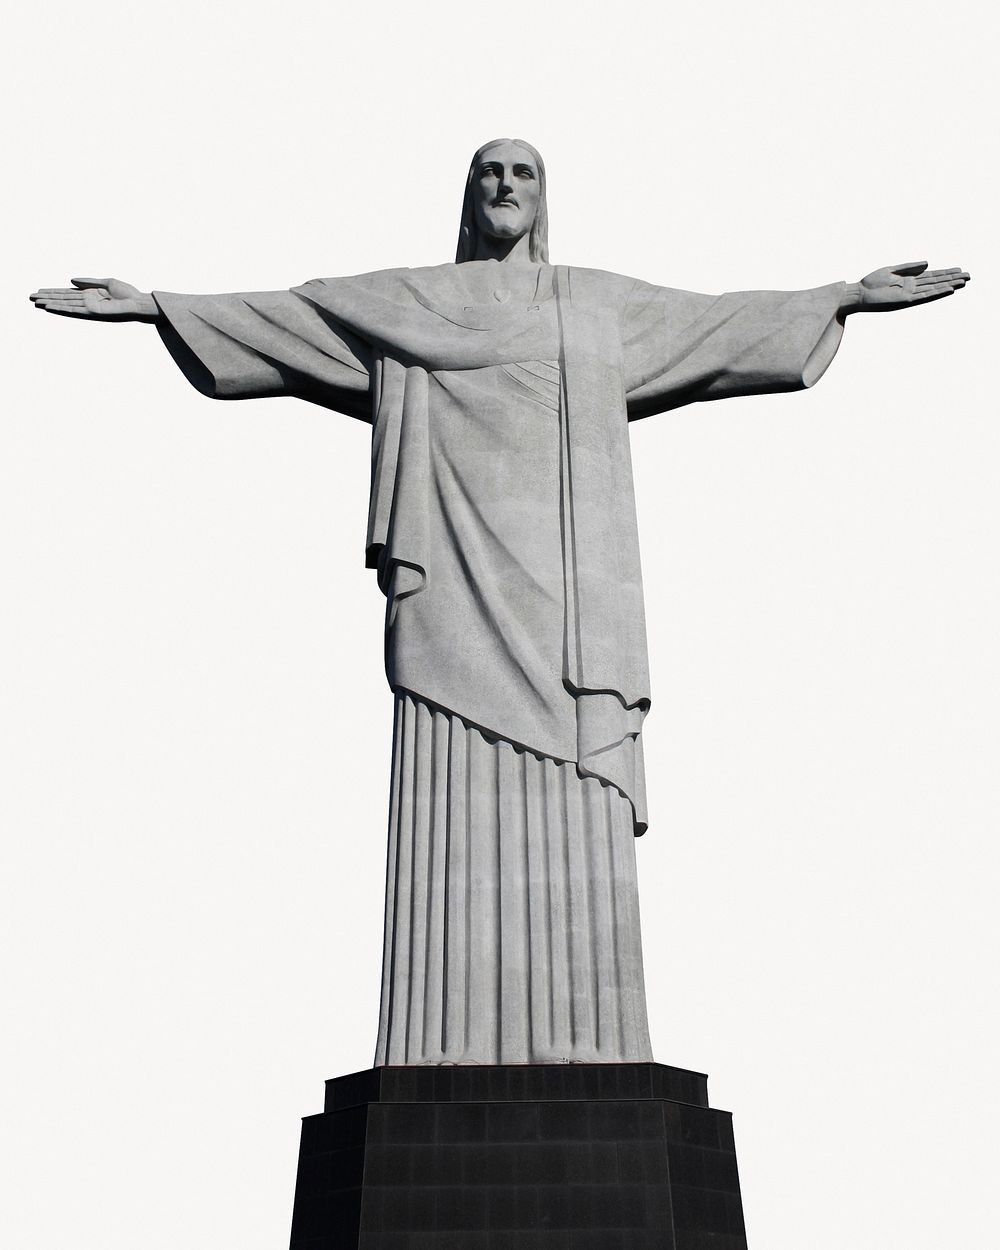 Christ the Redeemer, Jesus Christ statue in Rio de Janeiro